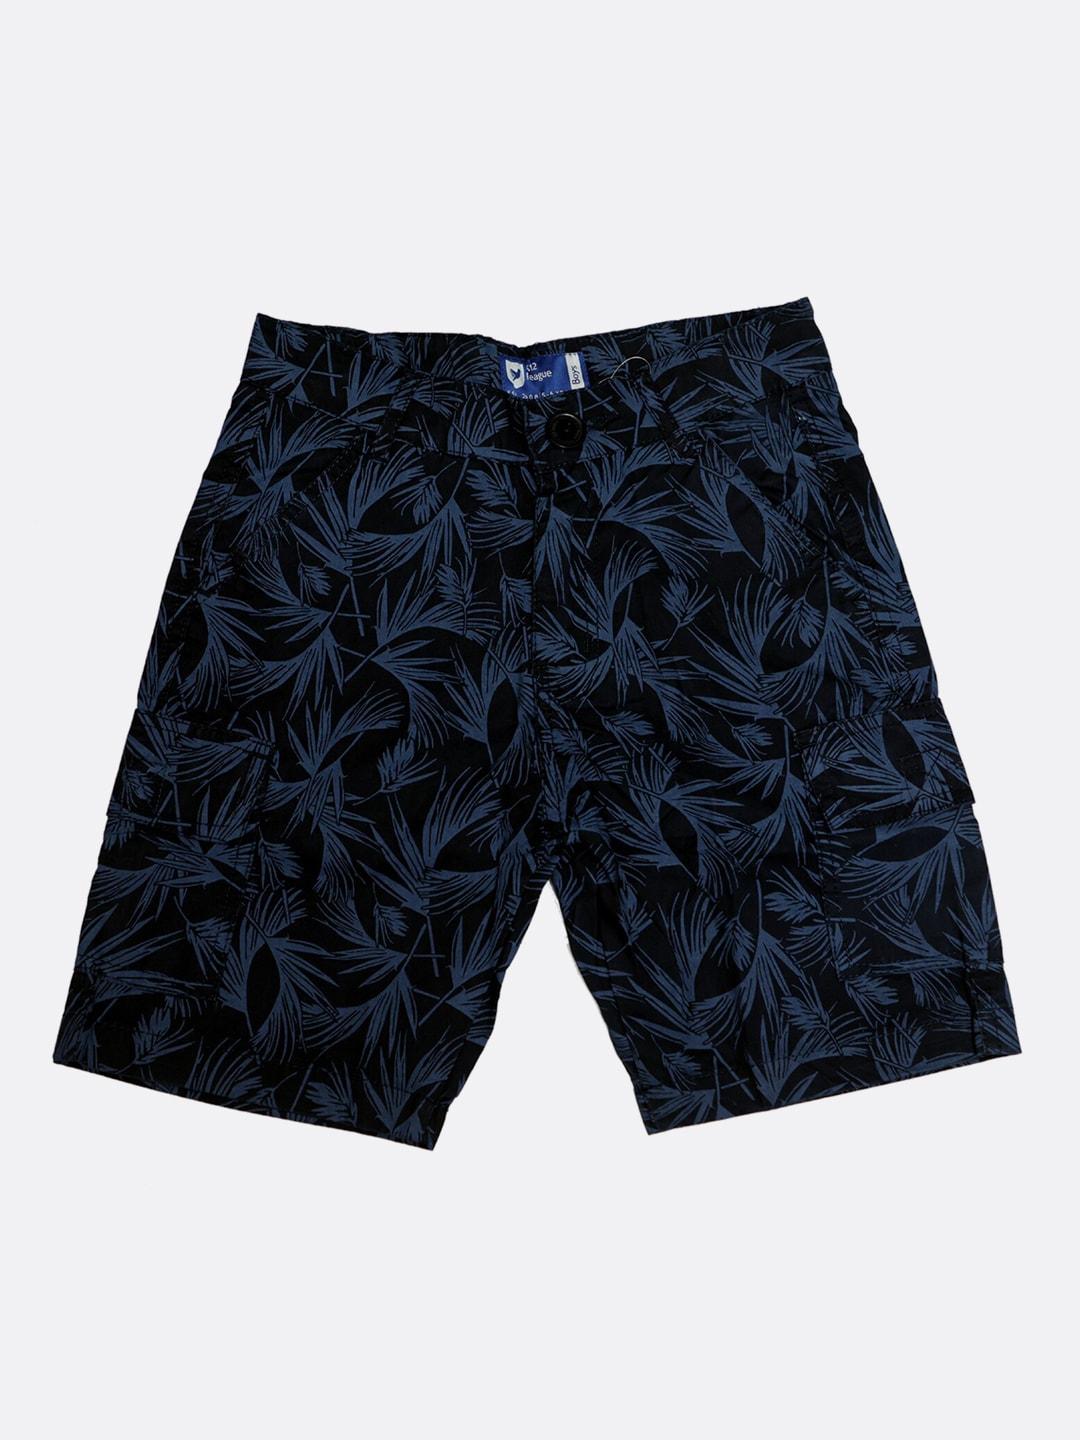 612league boys blue floral printed running shorts